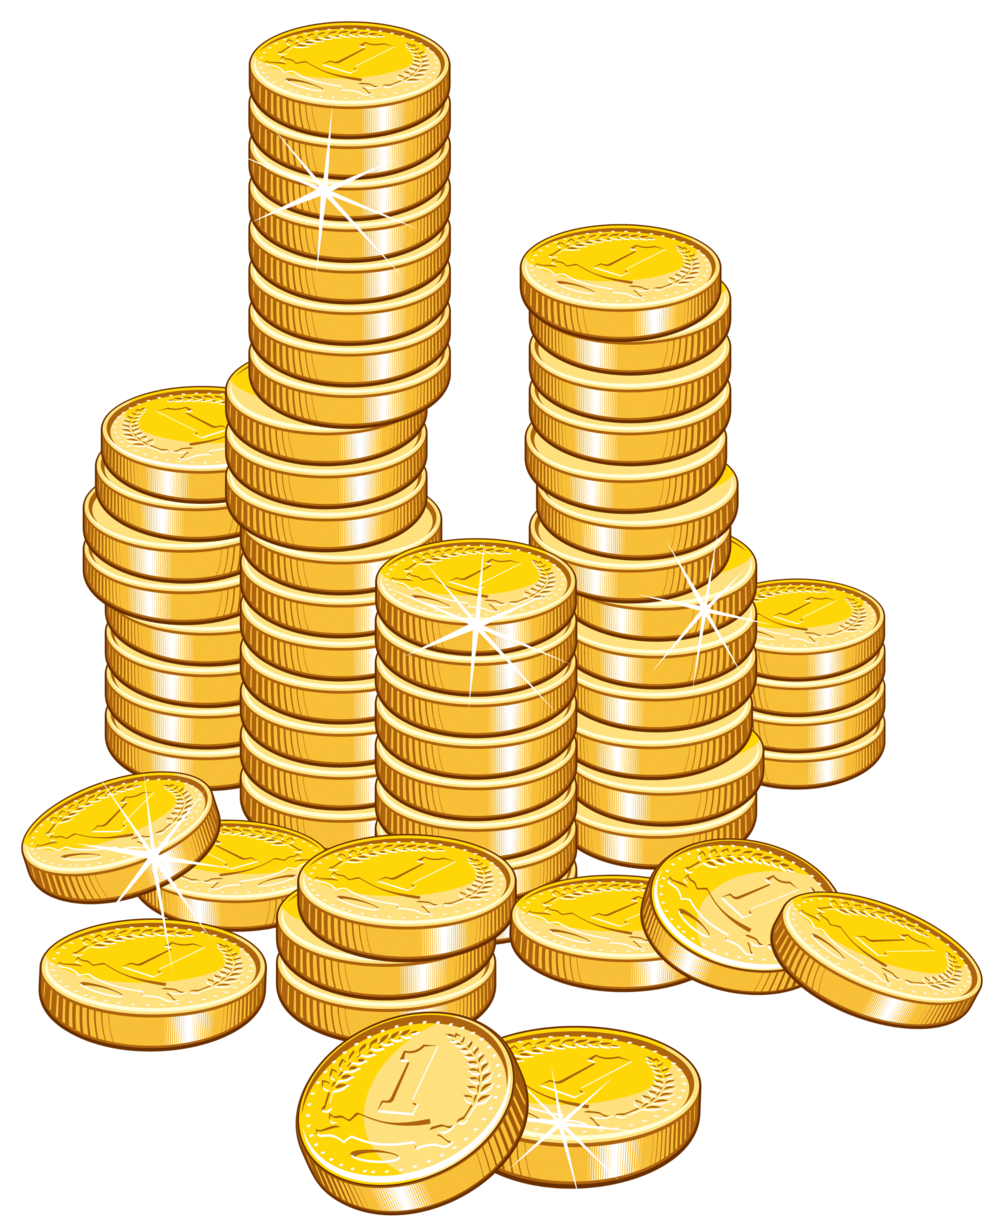 Coin clipart finances. Global distributor silberpfeil energy